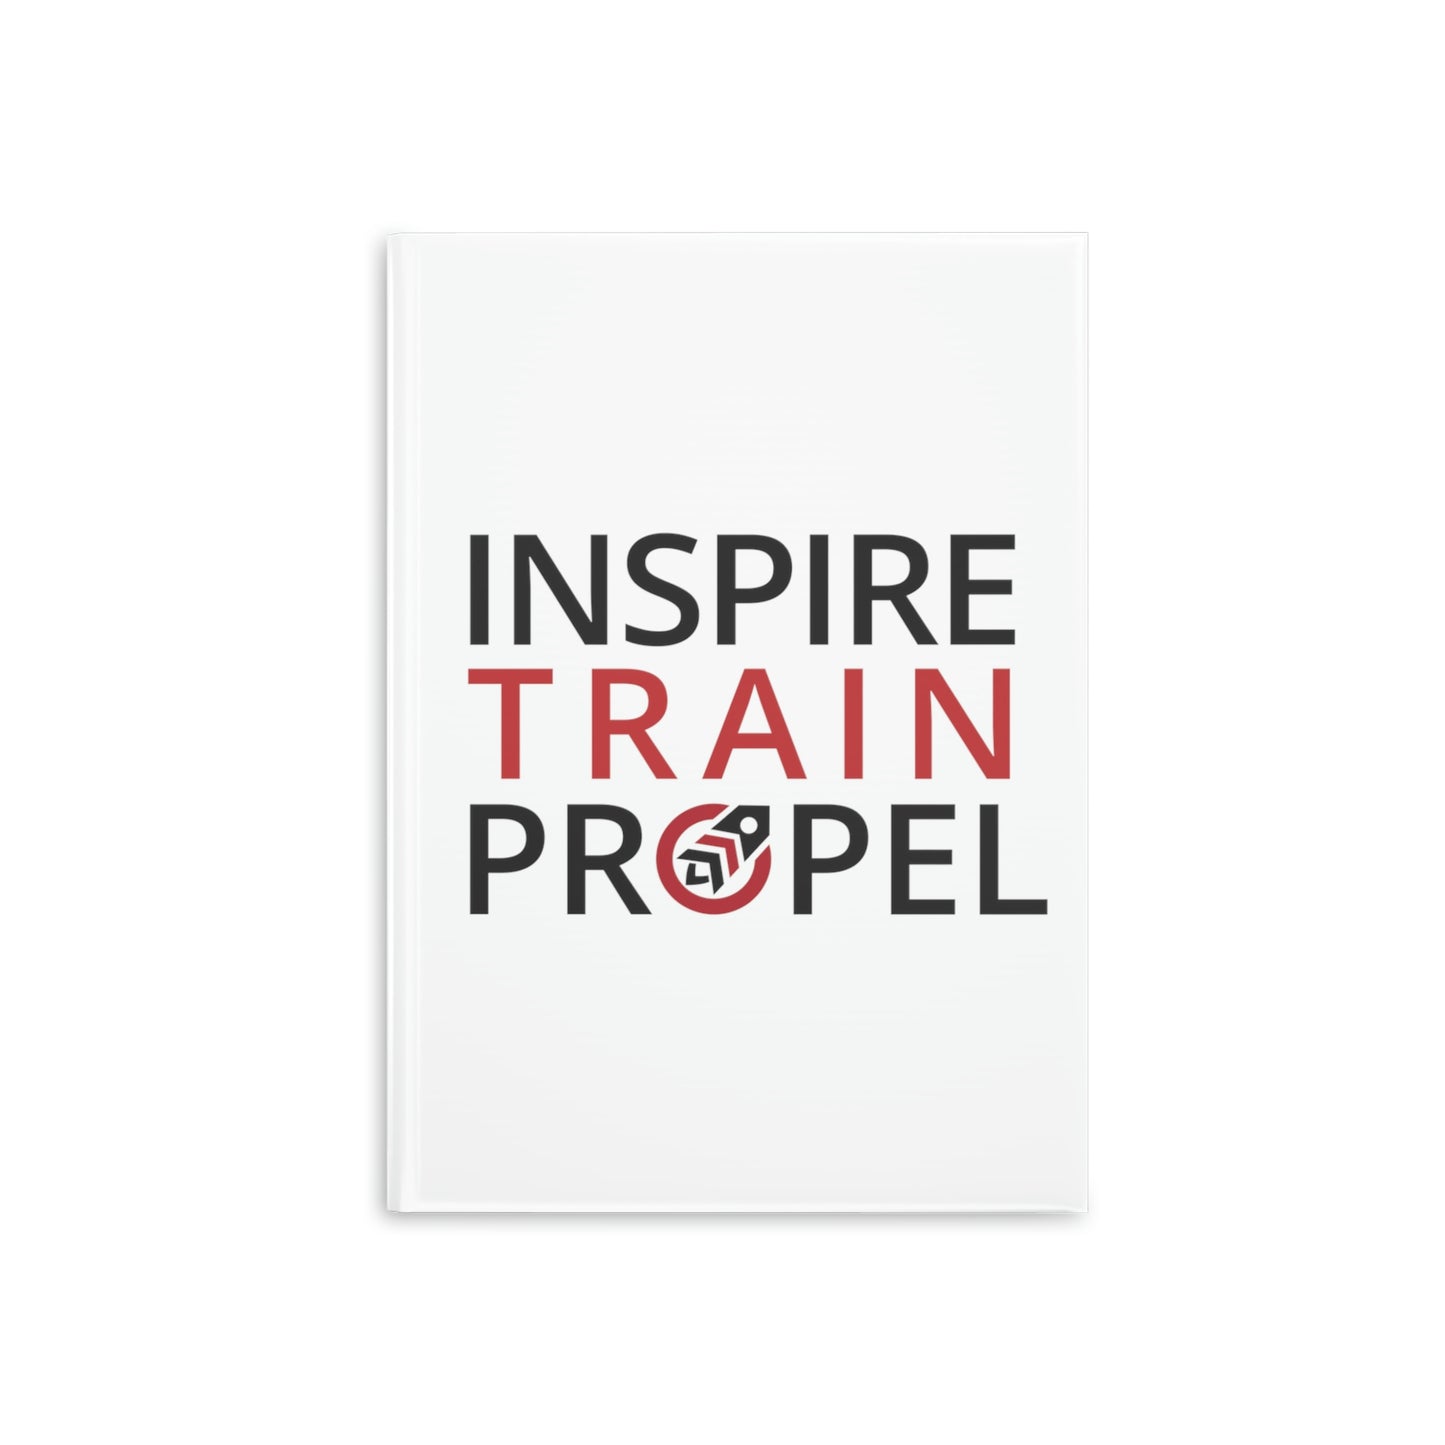 Inspire Train Propel Hardcover Notebook